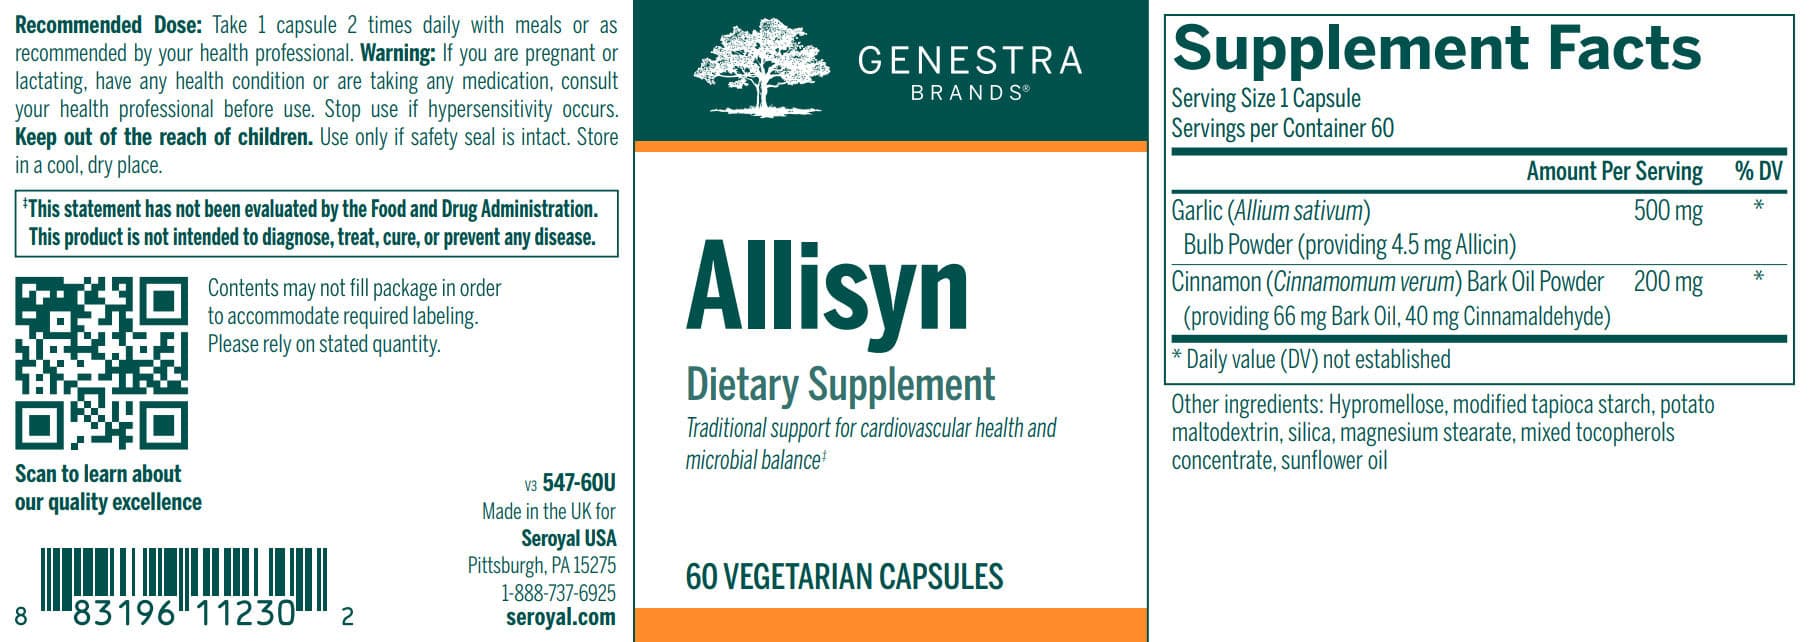 Genestra Brands Allisyn Label